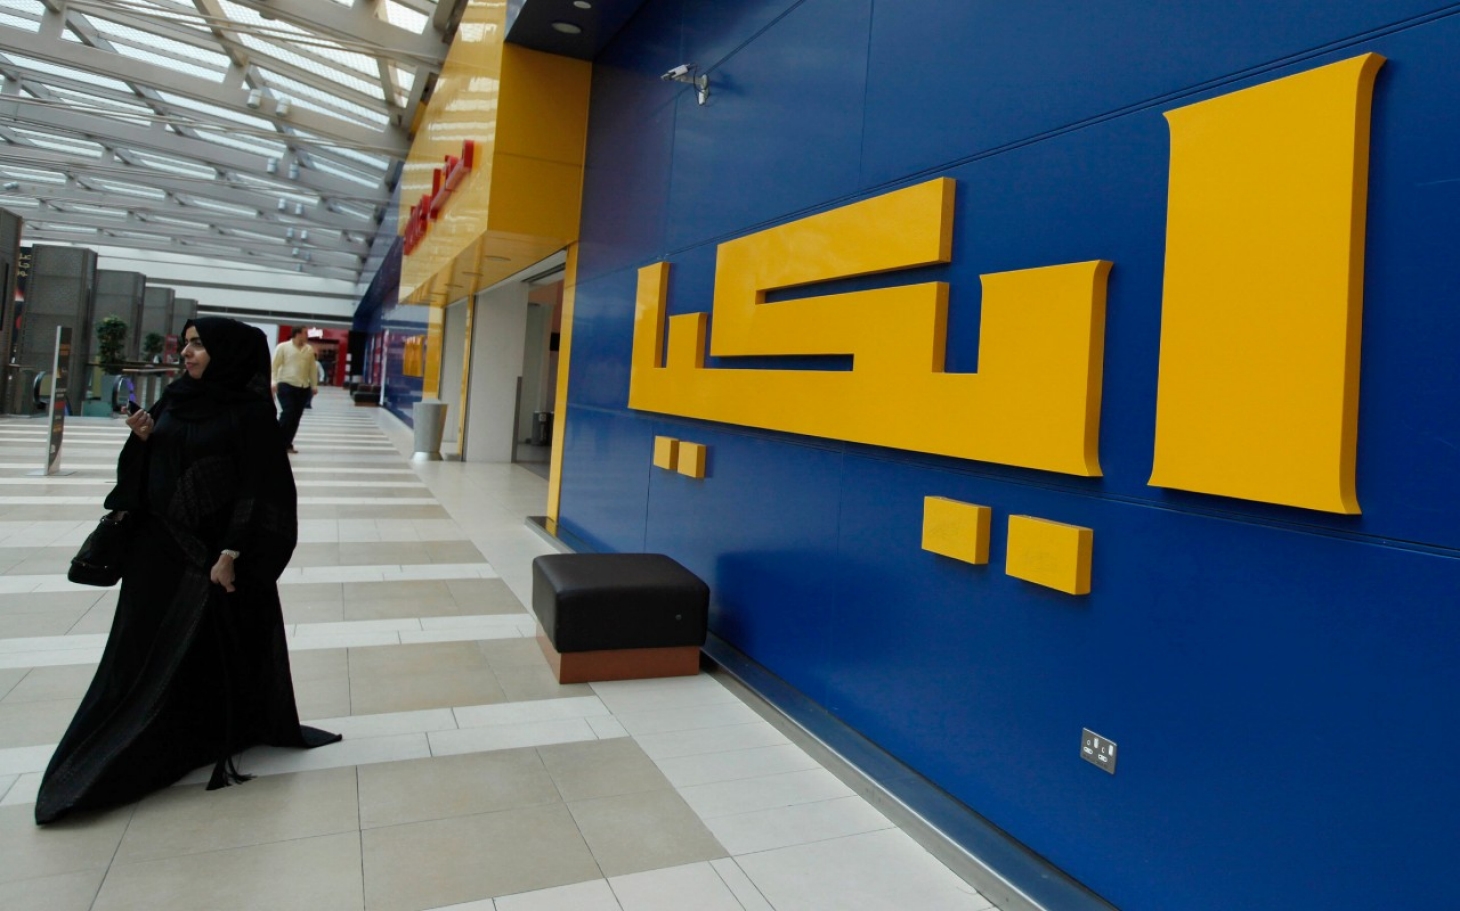 waterbestendig Lach Terugbetaling Swedish icon Ikea is really a Dutch 'charity' | Al Jazeera America